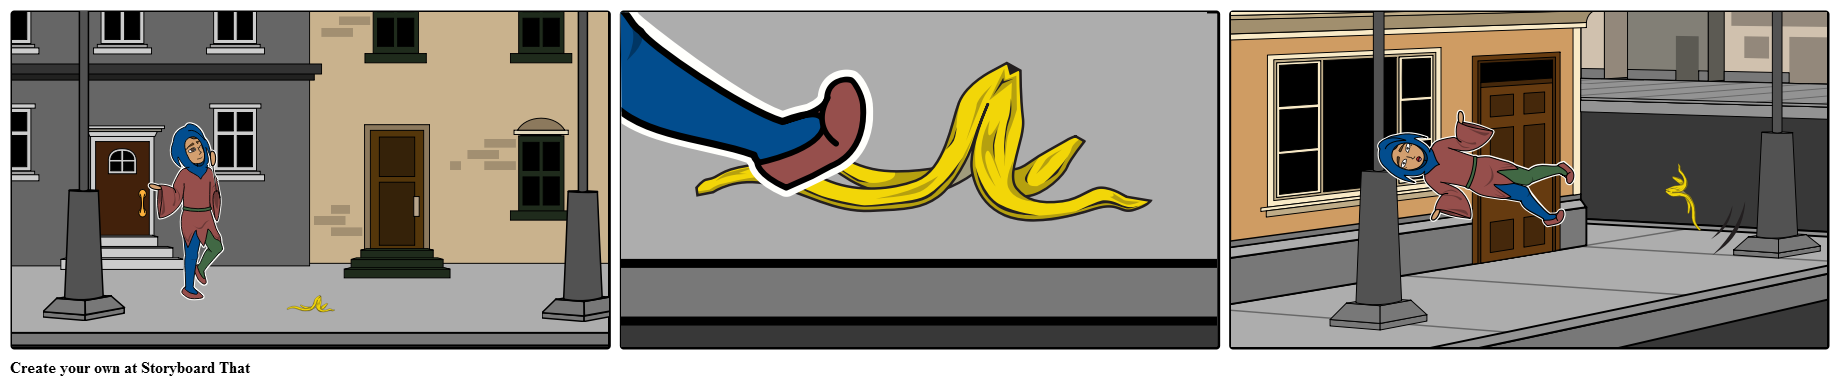 Jester wsuwa skórkę banana